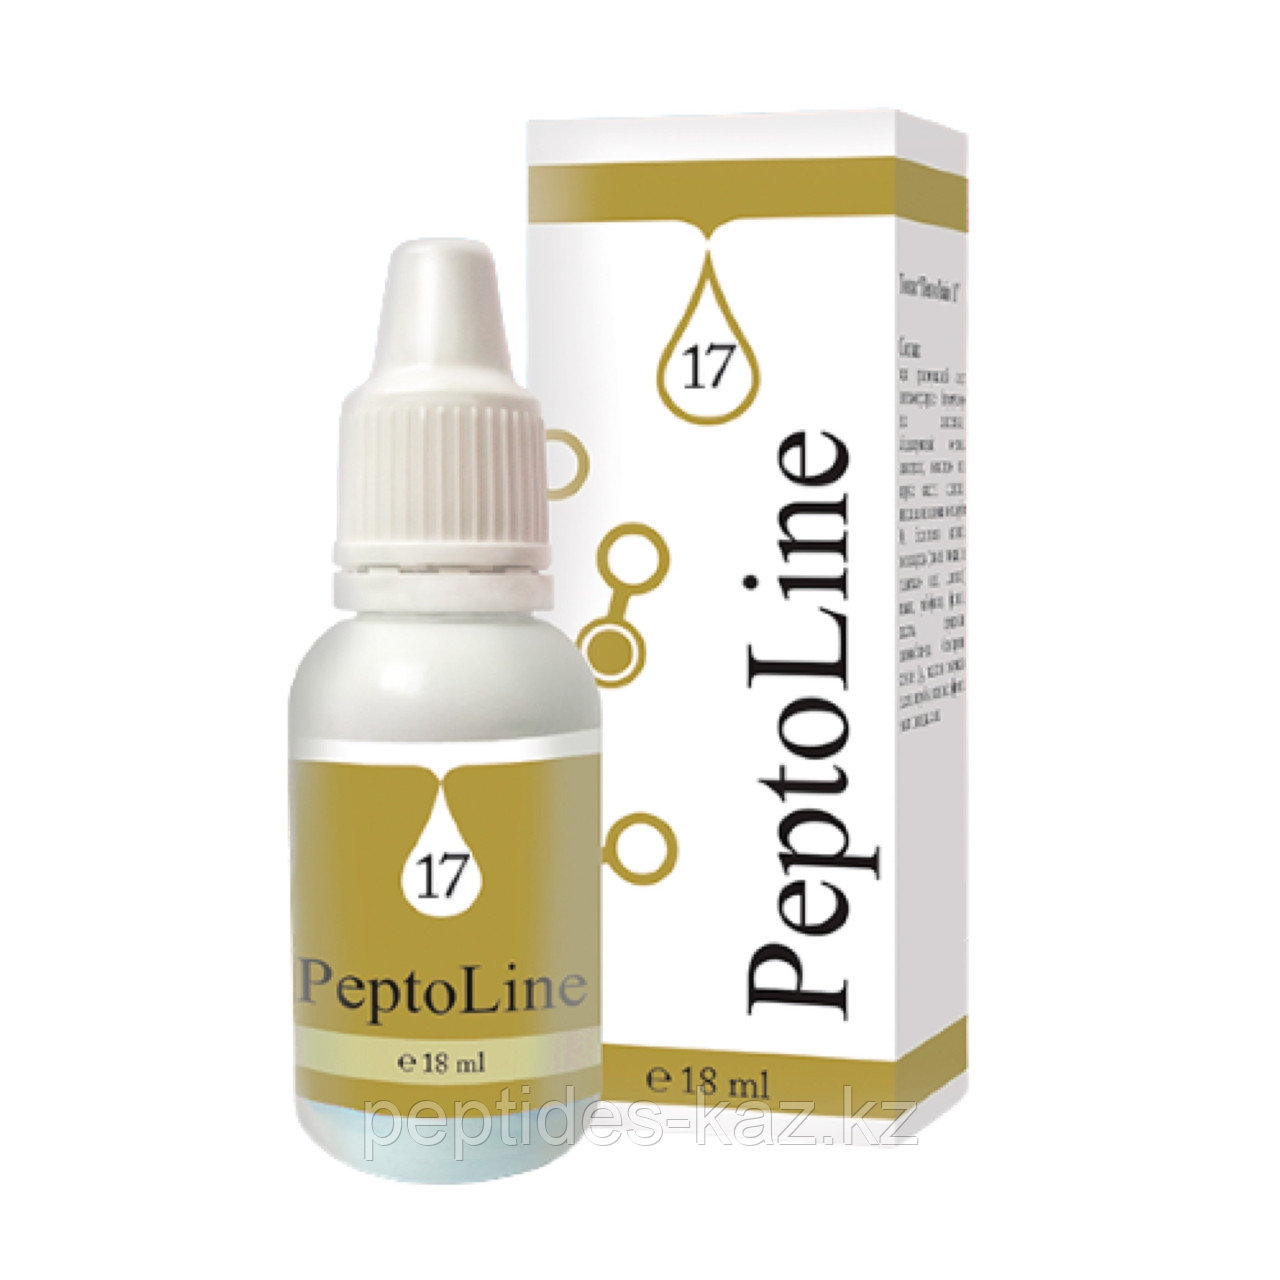 PeptoLine 17 для поджелудочной железы, пептидный комплекс 18 мл